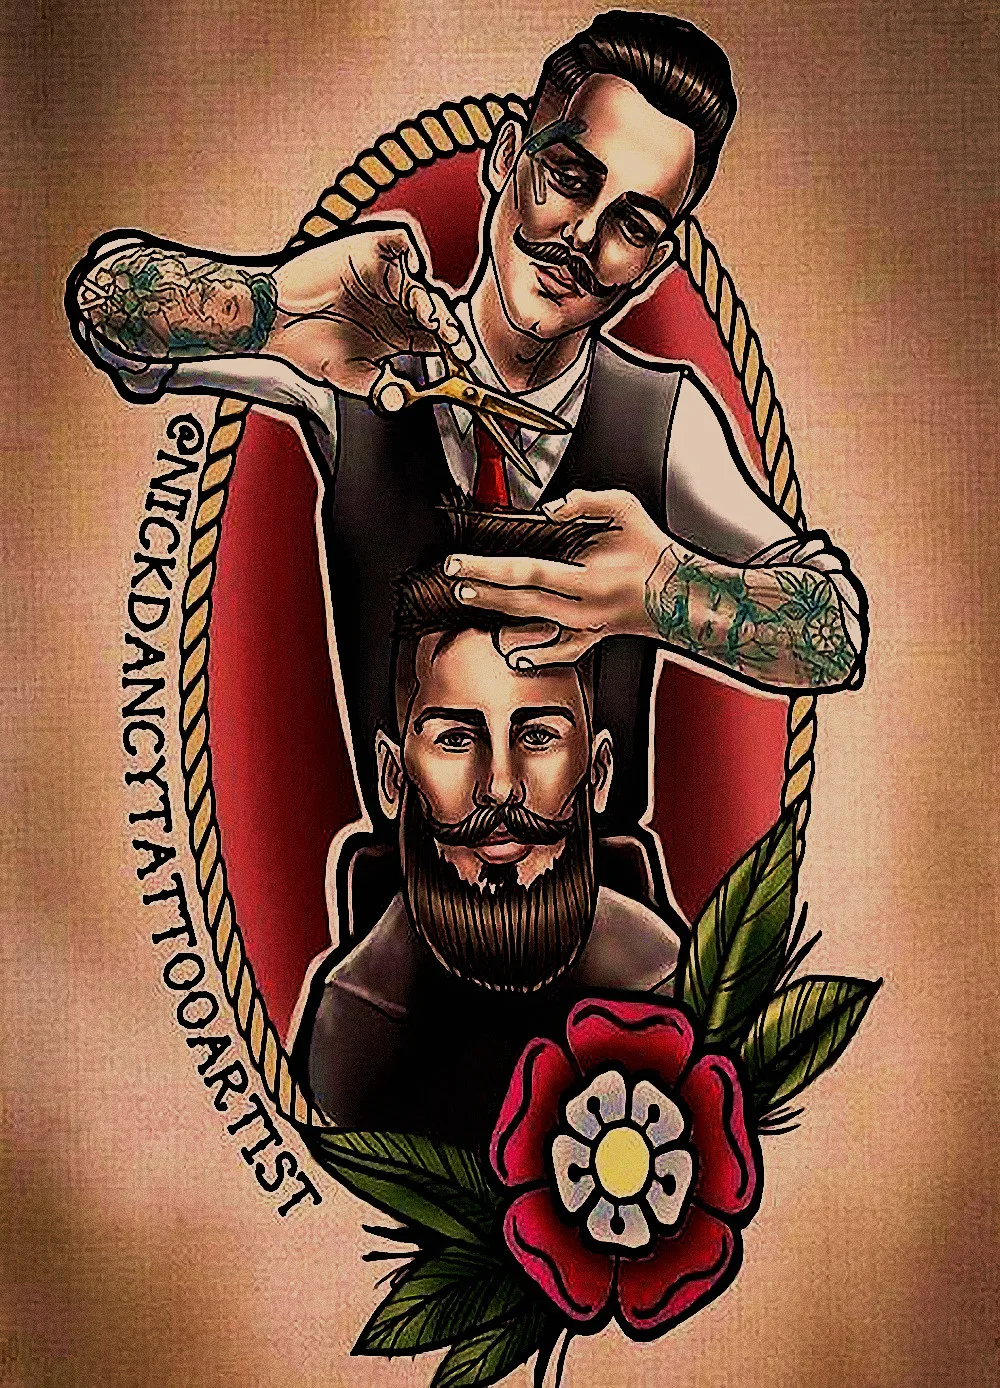 Saul Sanchez Art on Tumblr: linework down on this barber tattoo